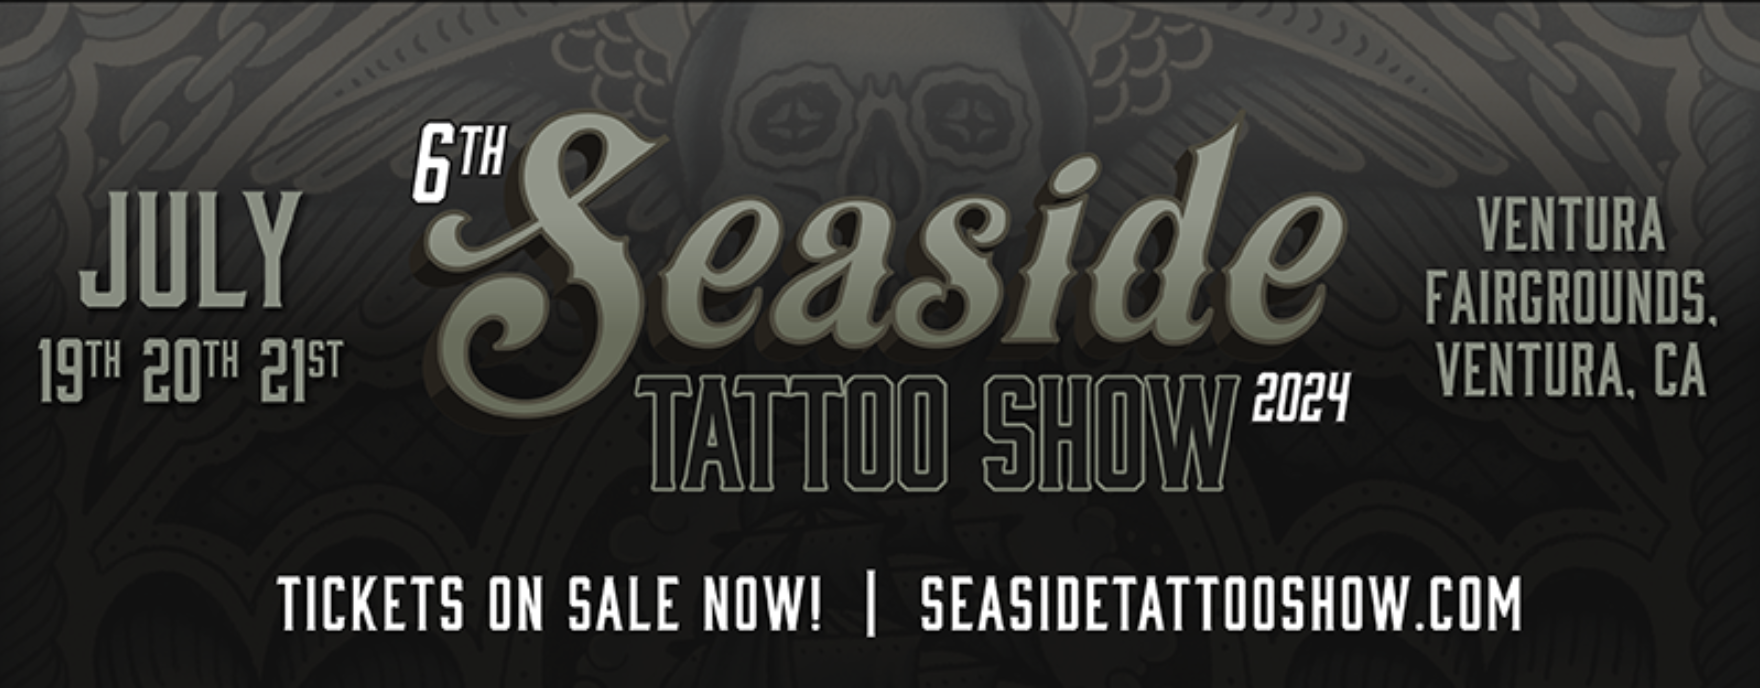 Seaside Tattoo Show